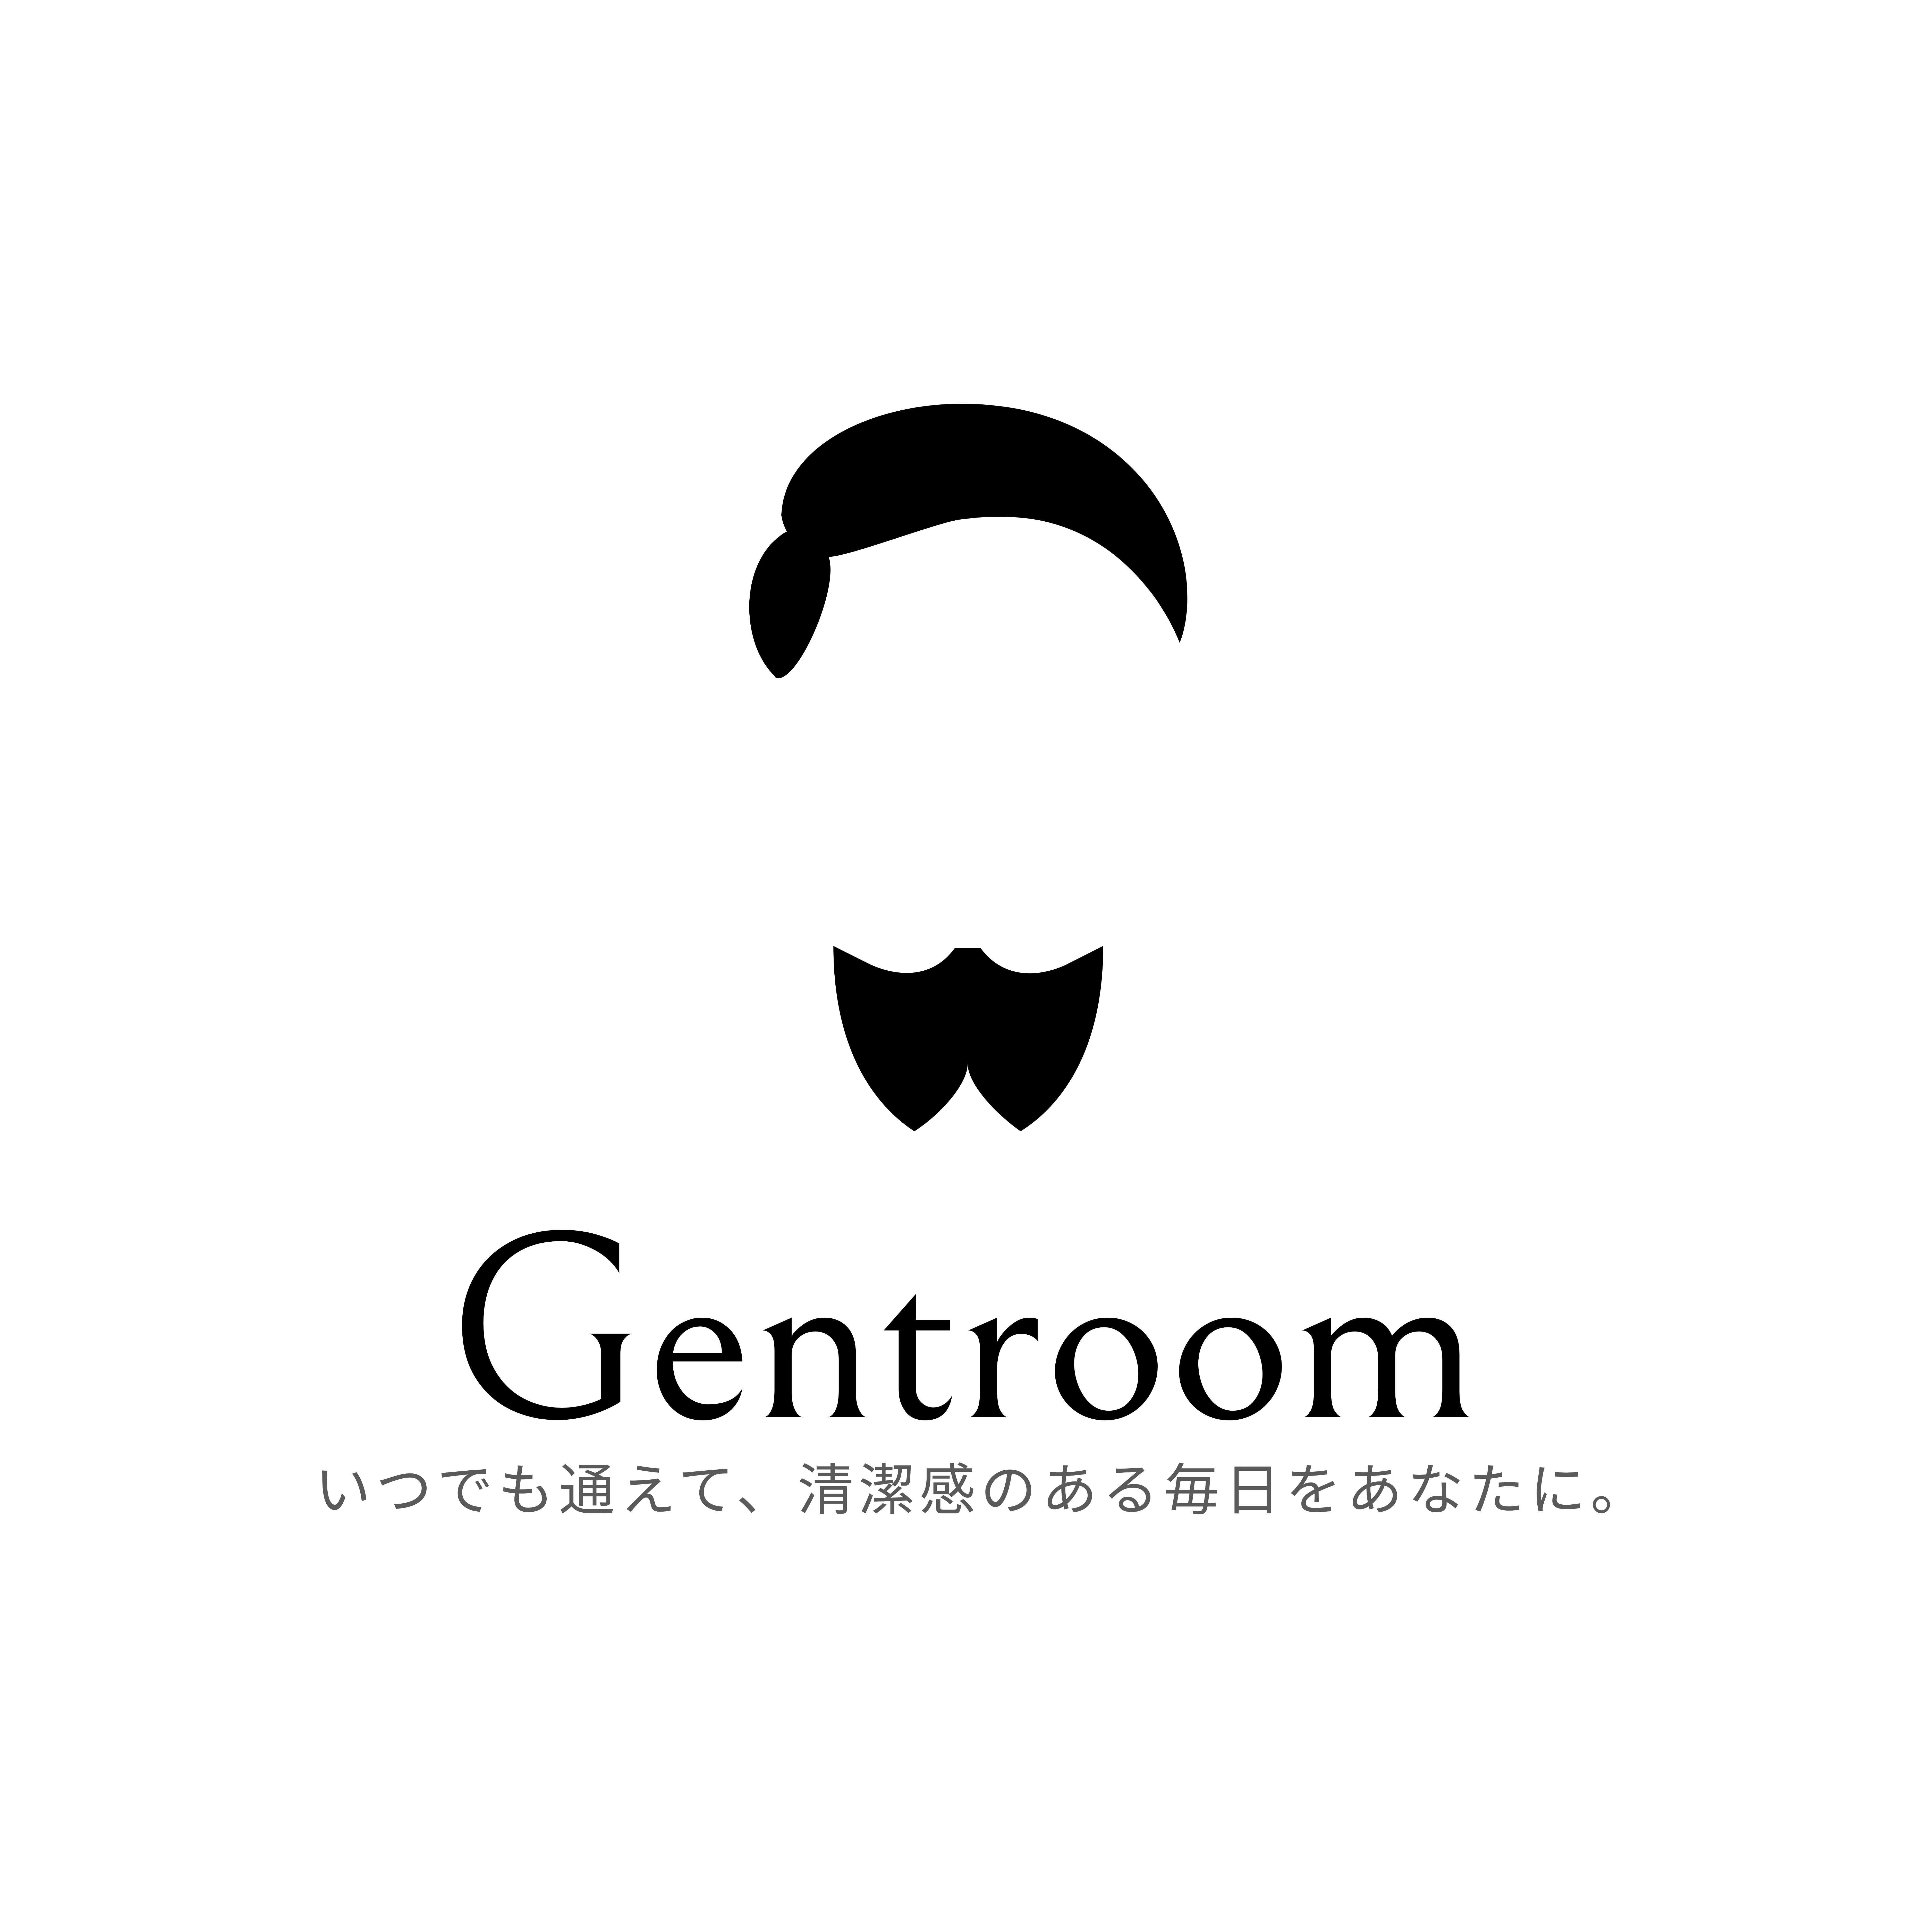 Gentroom メンズのための月額会員制美容室 通い放題サービス 原宿本店 大人男子のためのメンズ専門美容室gentroom ジェントルーム